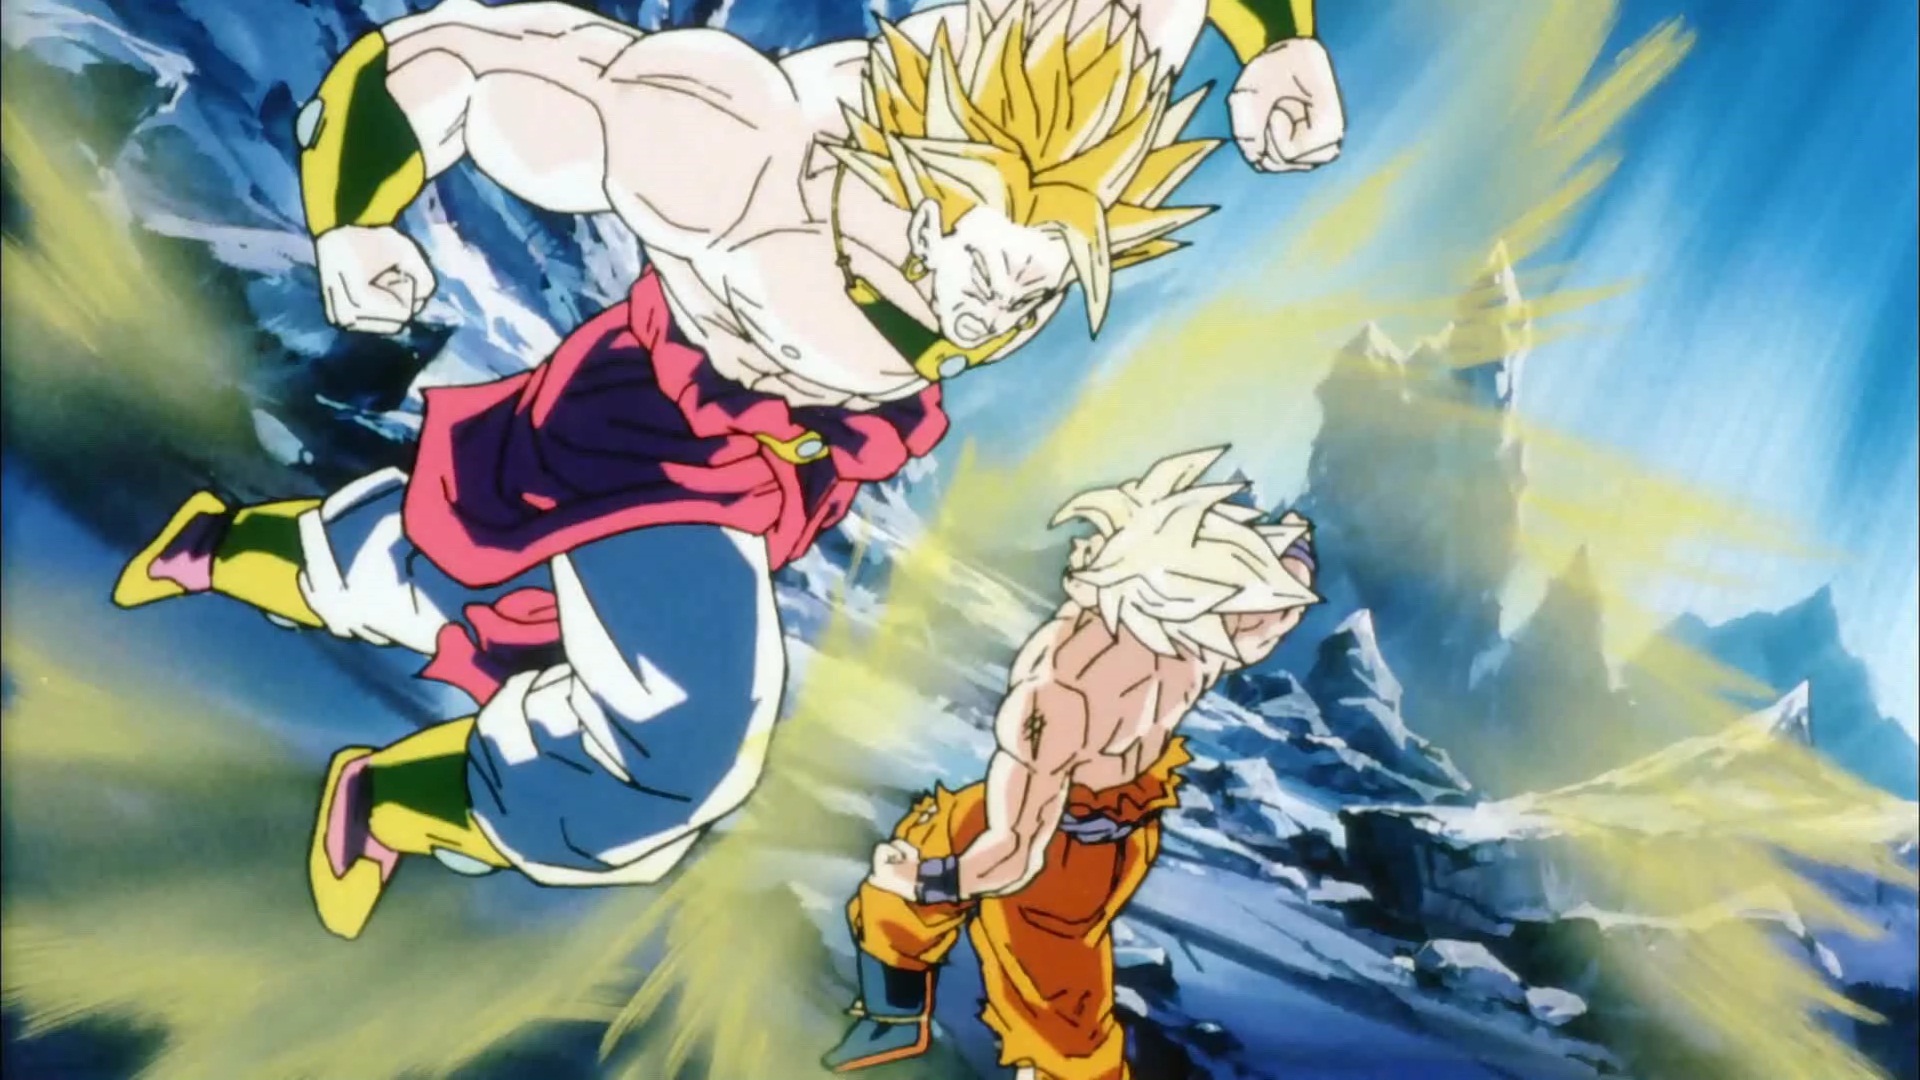 Goku vs broly wallpapers.